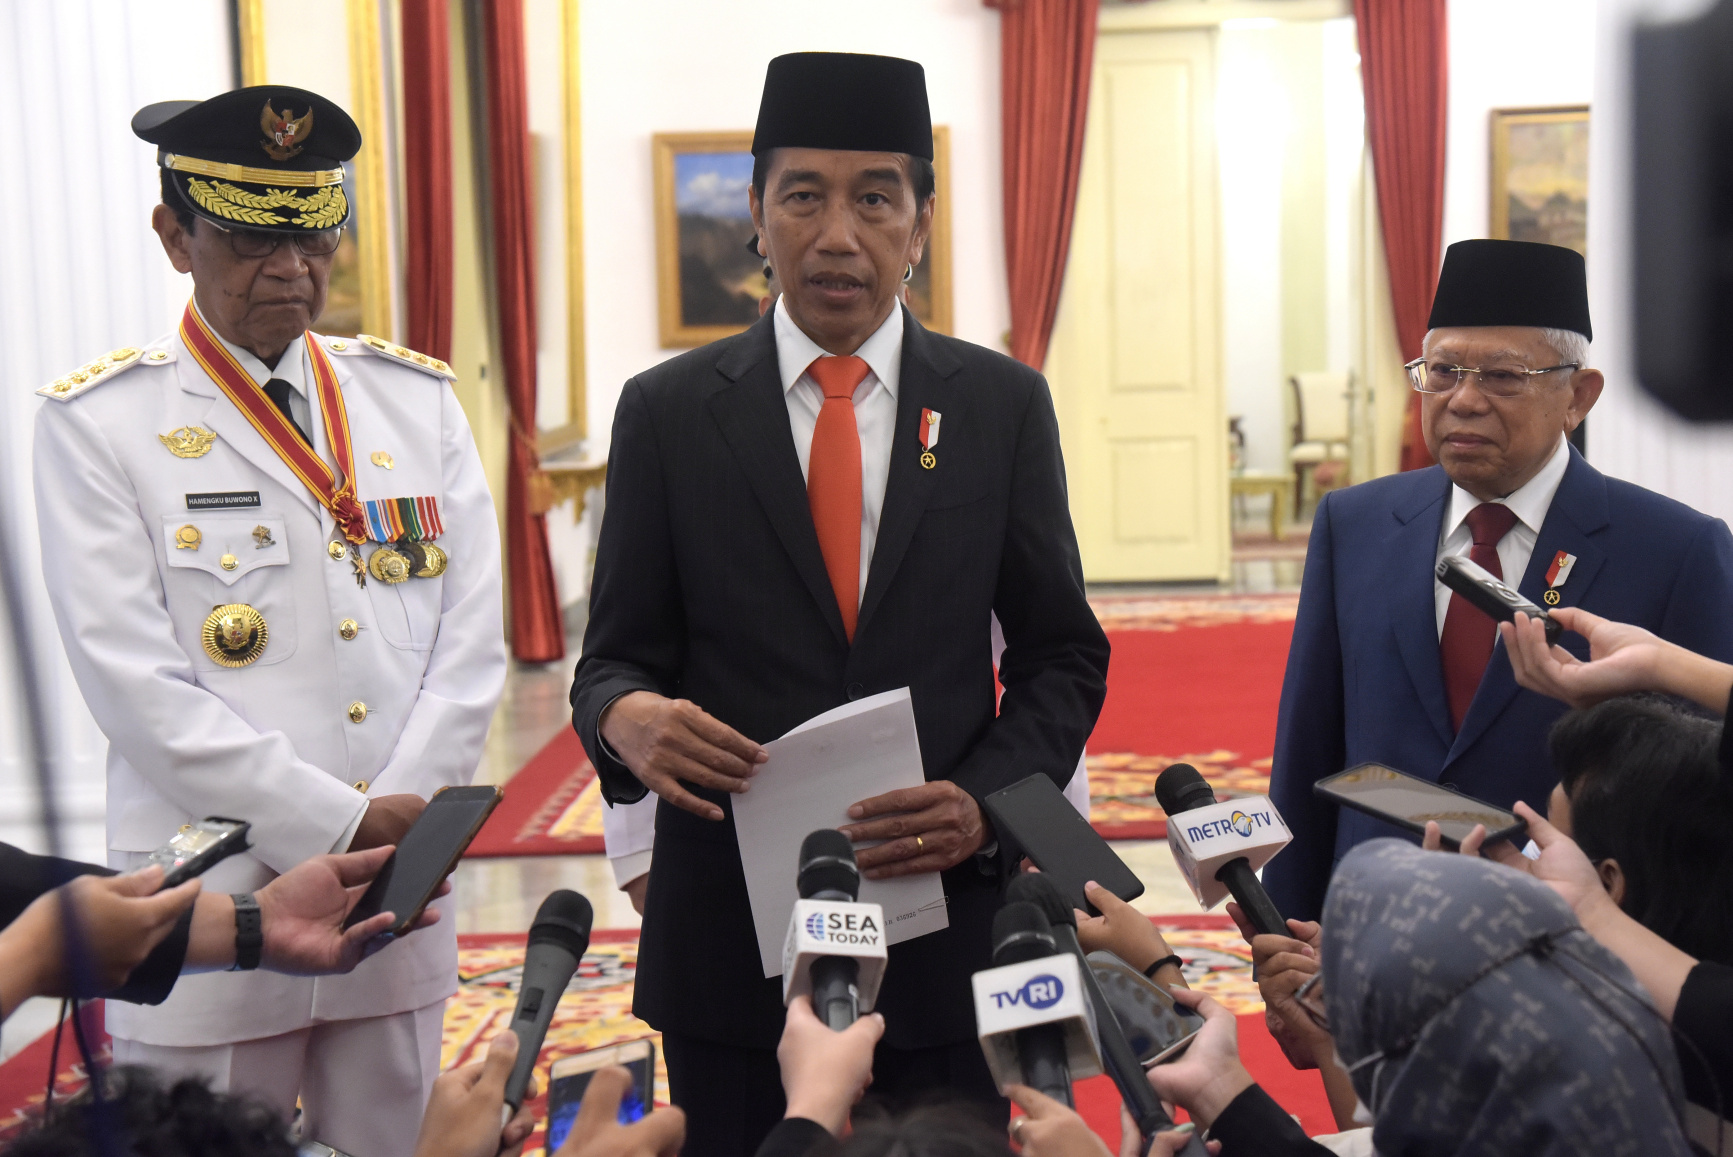 Daftar Nama Pj Gubernur yang Baru Ditunjuk Presiden Jokowi 